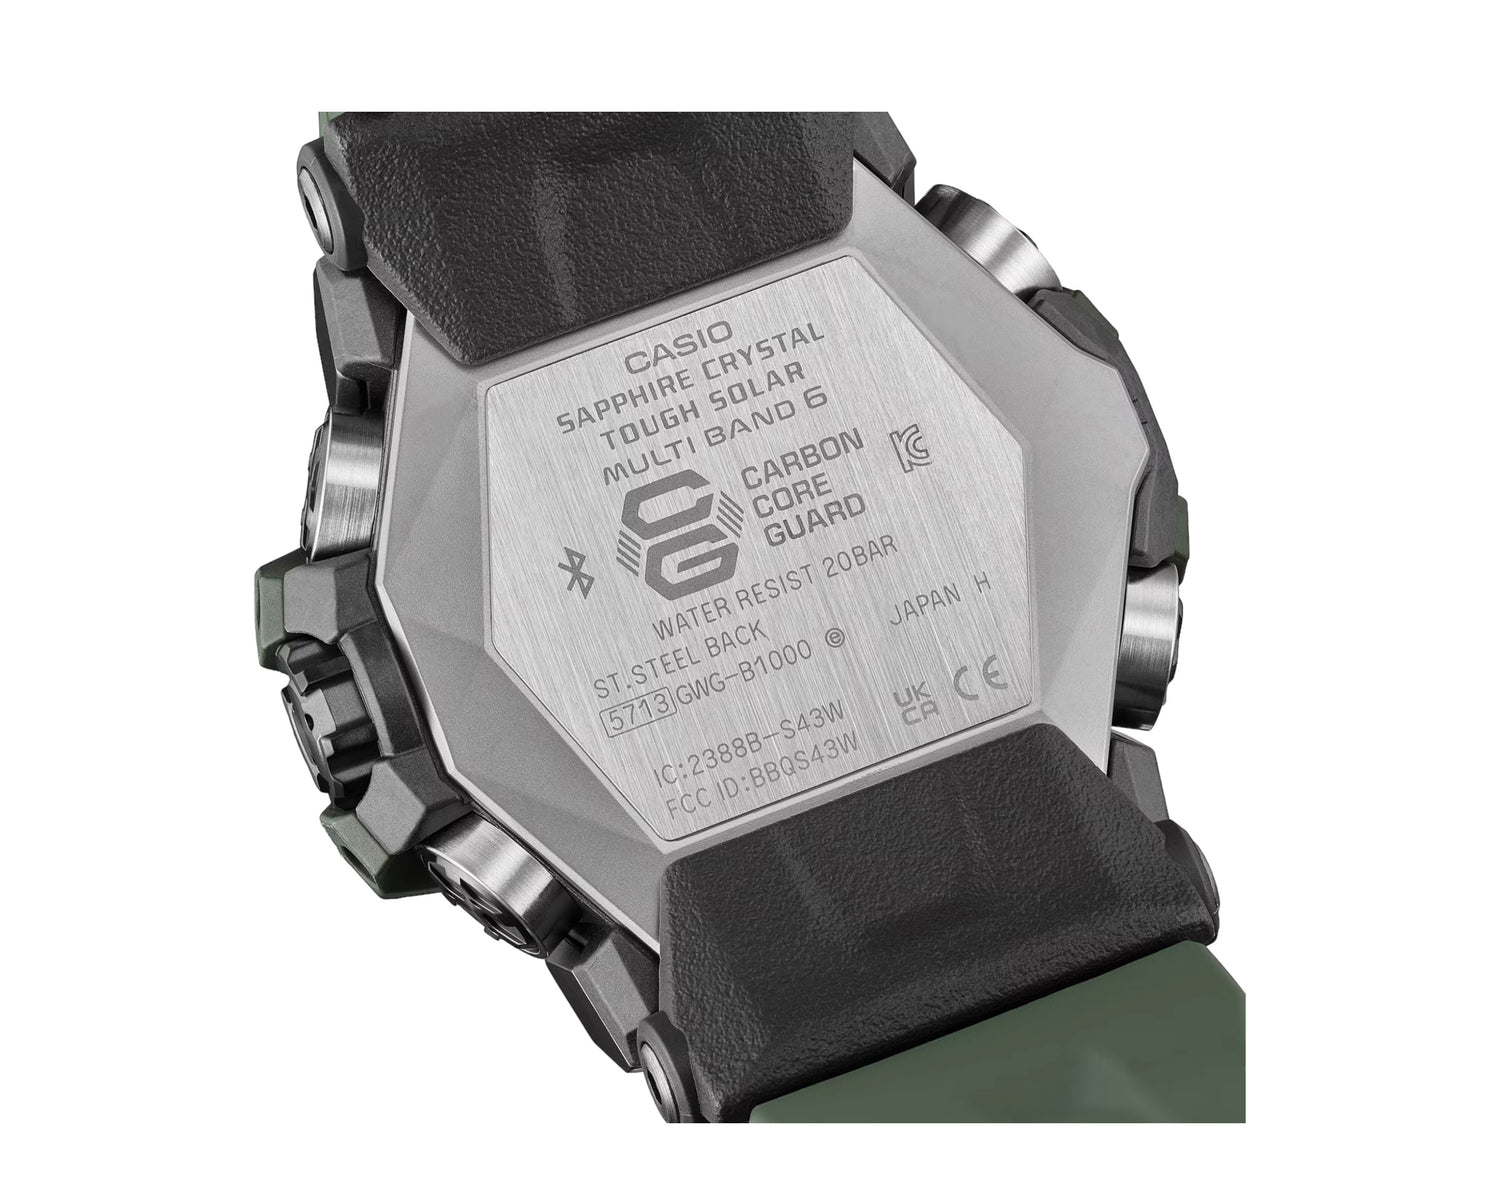 Casio G-Shock GWGB1000 Master of G Mudmaster Analog-Digital Watch